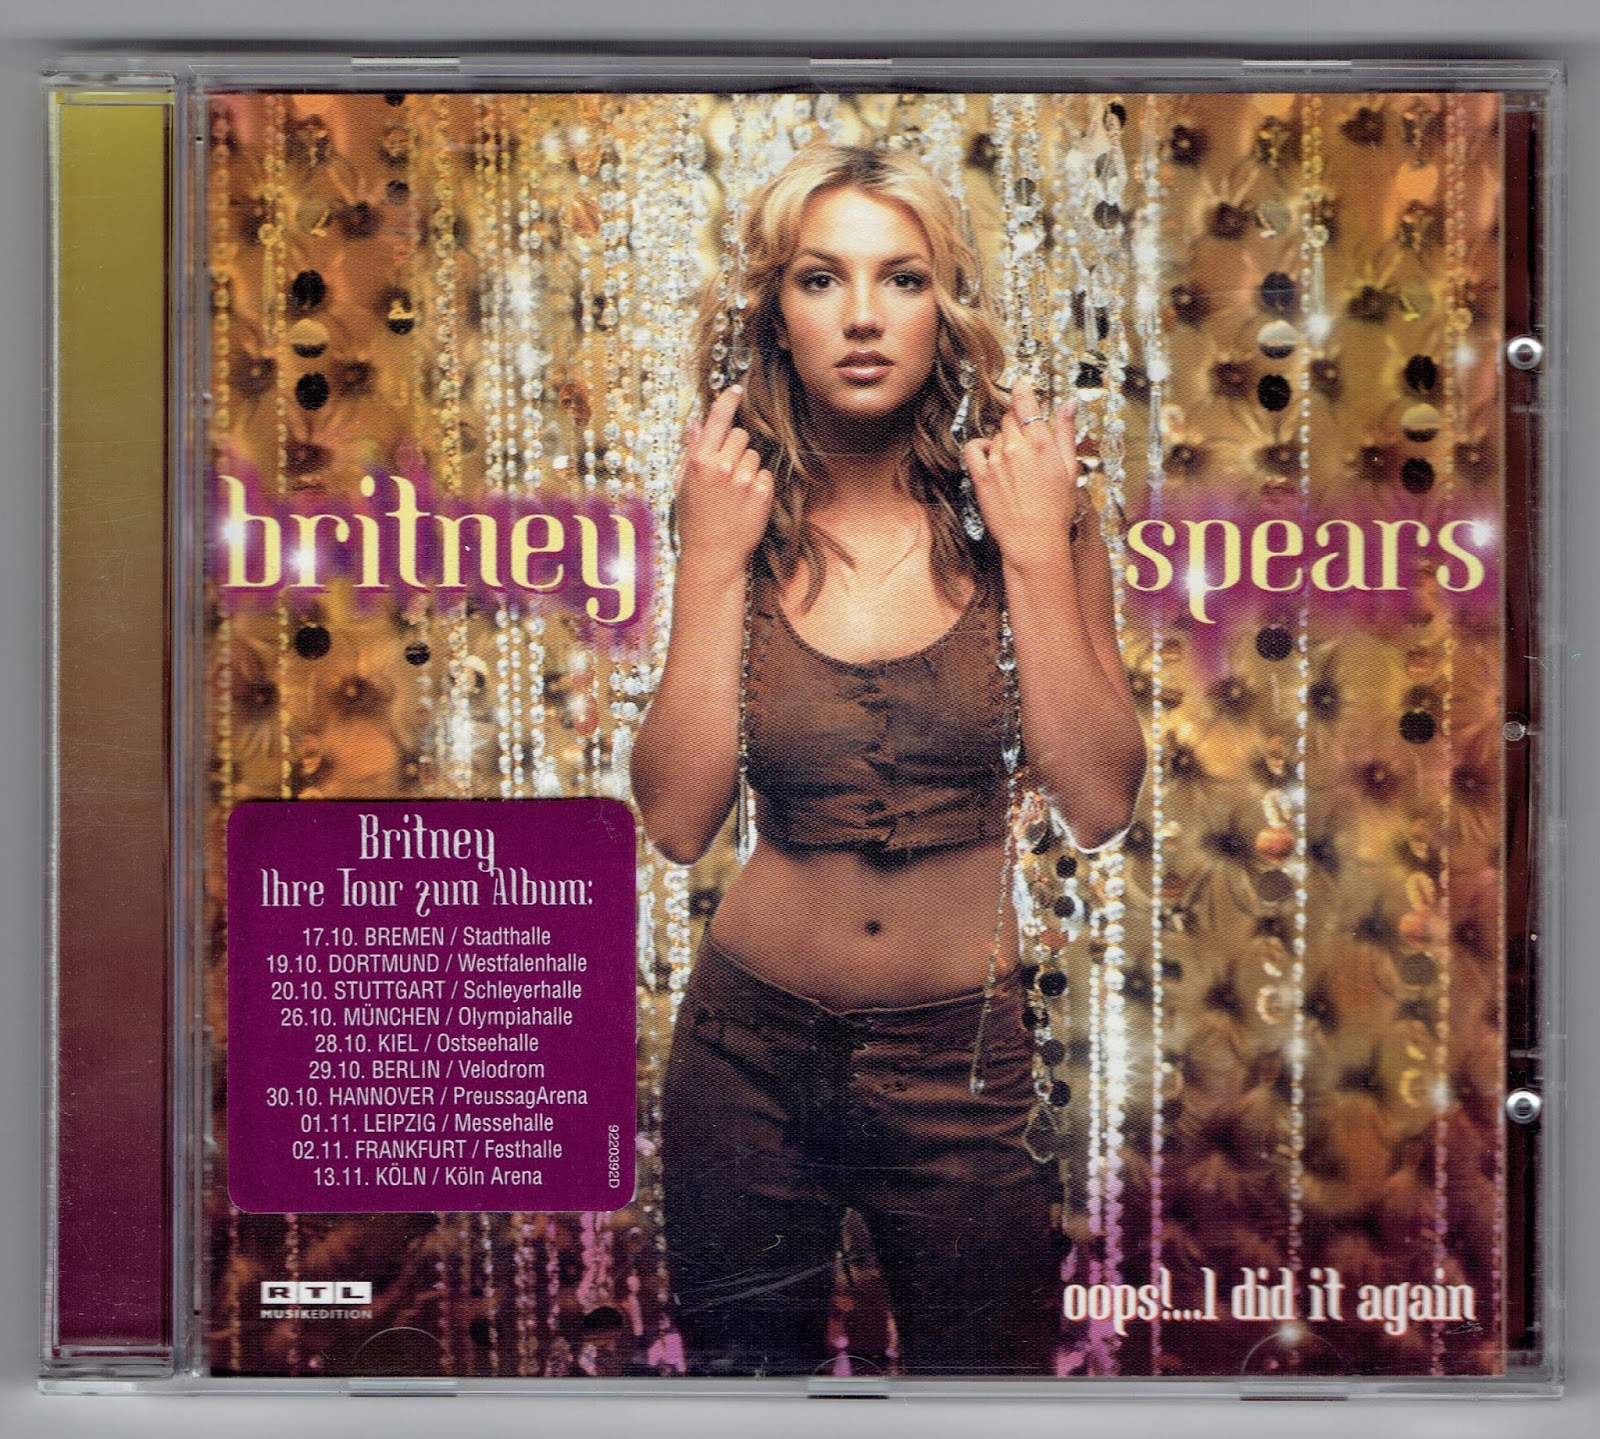 Doing again песня. Бритни Спирс ops i did it again. Britney Spears oops!... I did it again (2000) обложка. Britney Spears oops!... I did again album. Britney Spears CD.